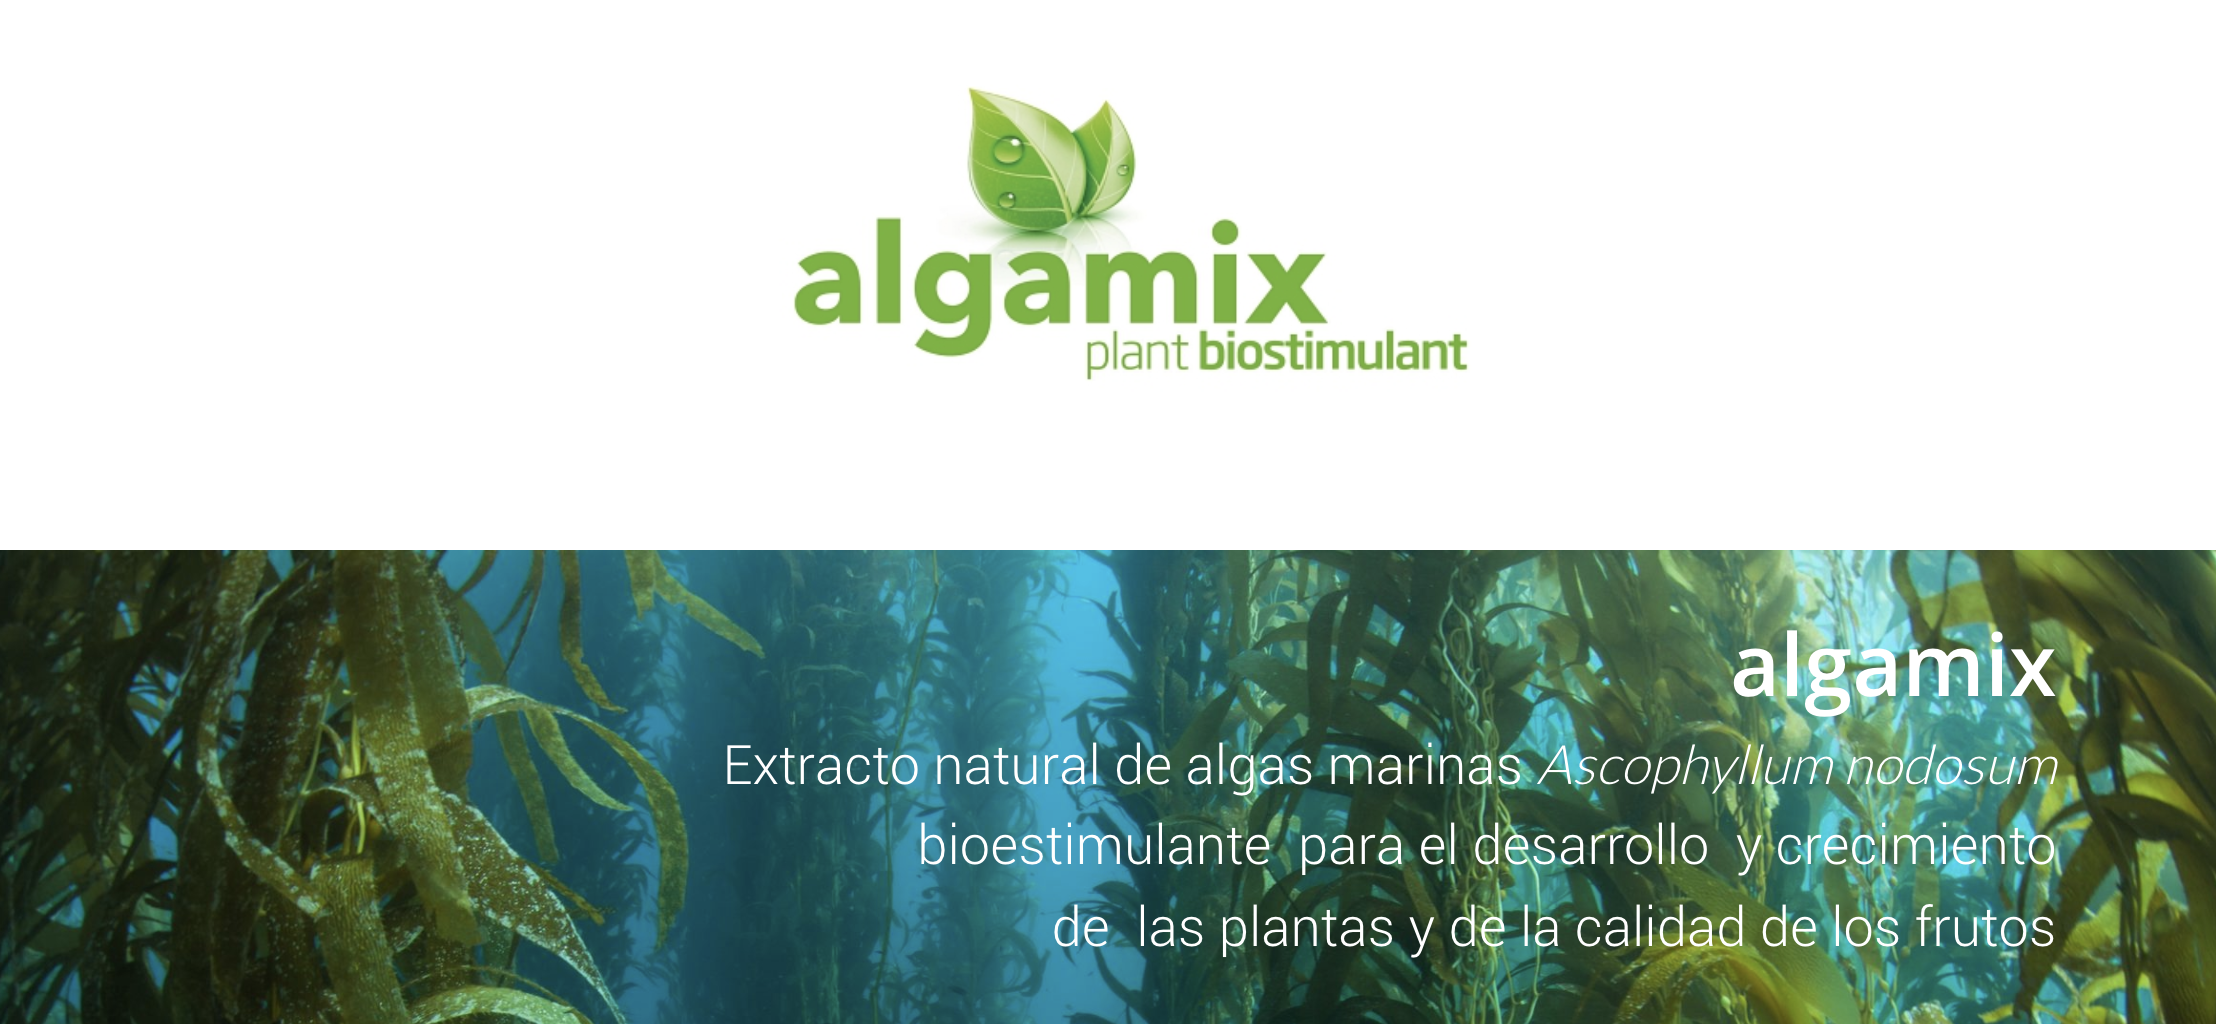 bioestimulante extracto algas algamix lida